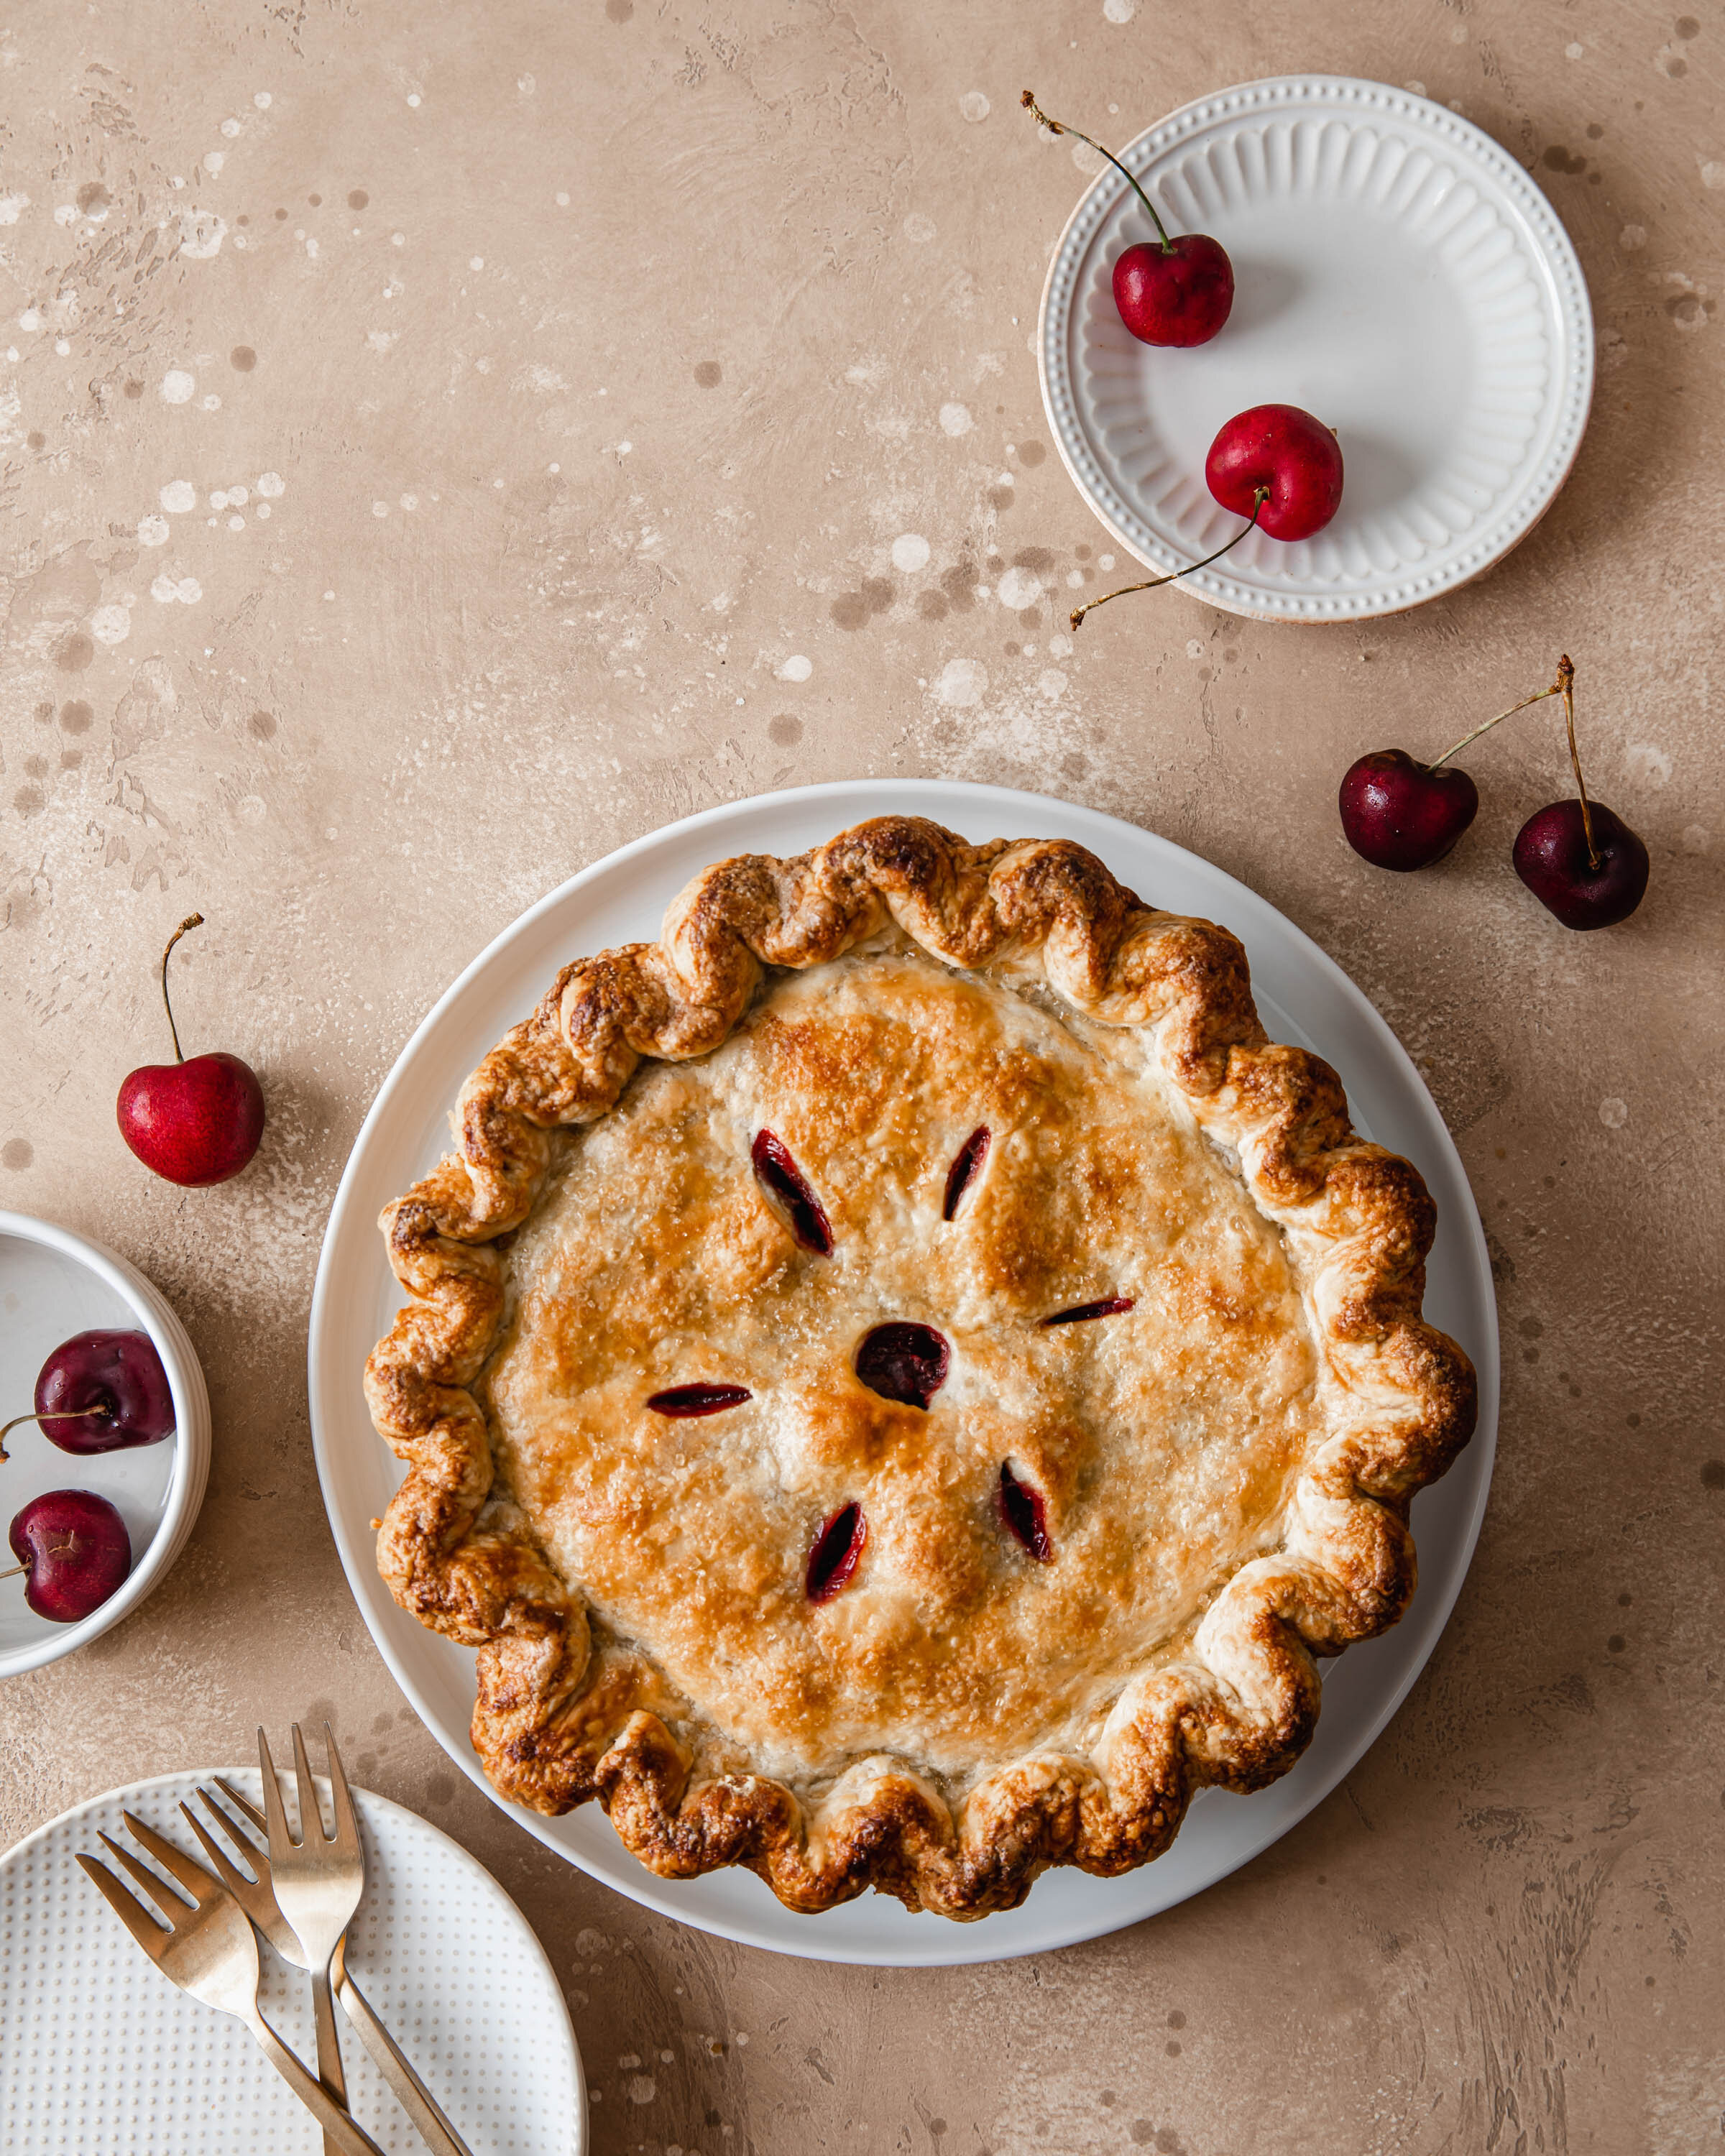 Sweet cherry pie recipe from scratch.